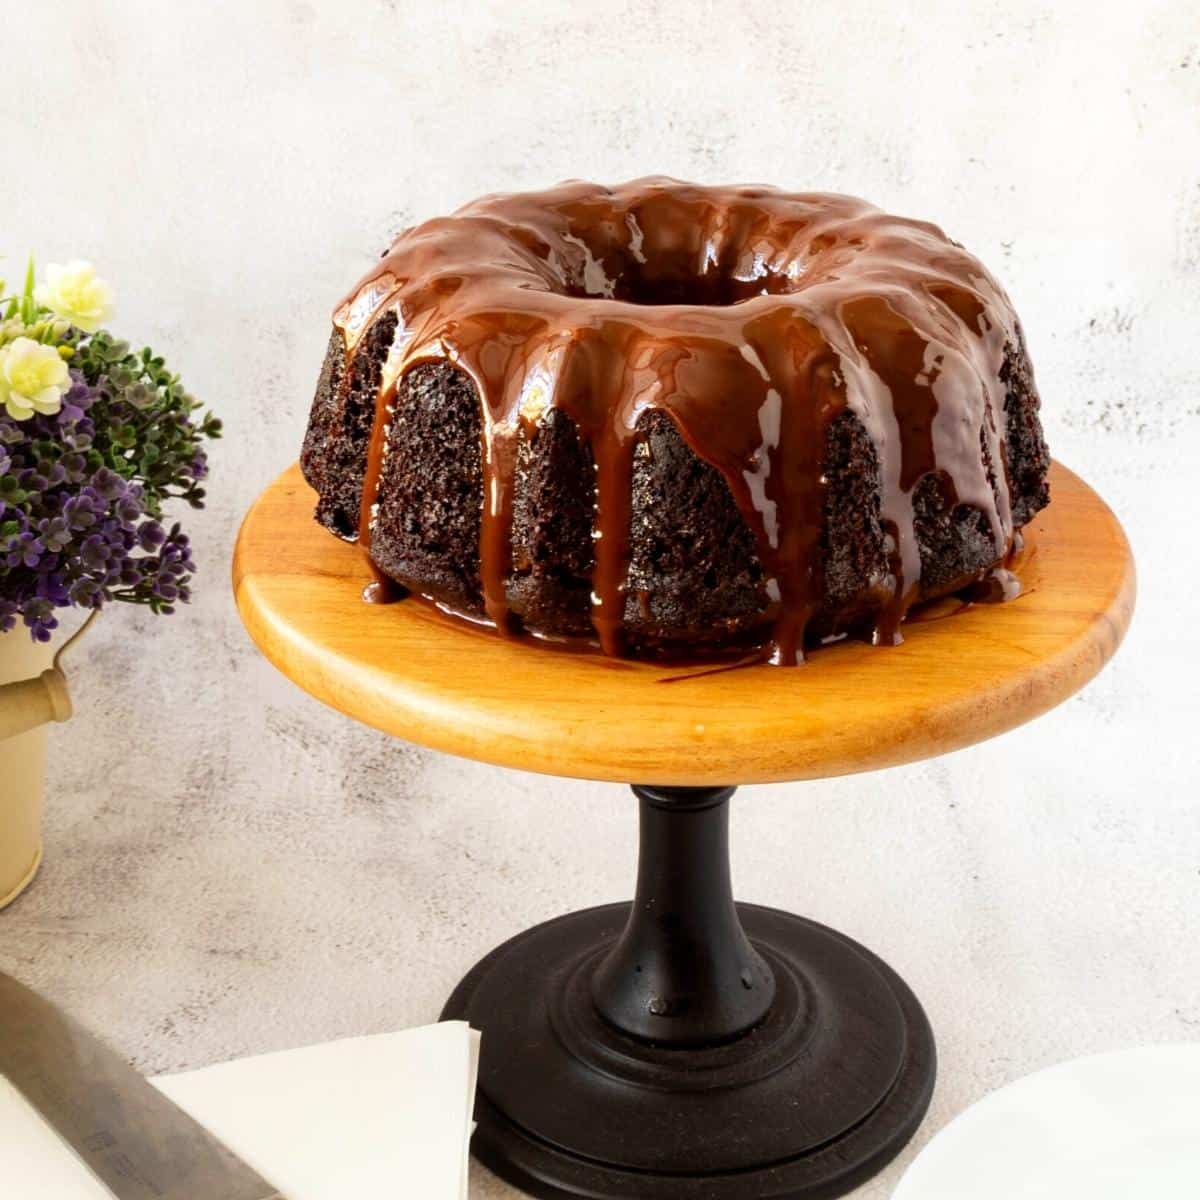 Bundt cake with chocolate glaze on the cake stand.